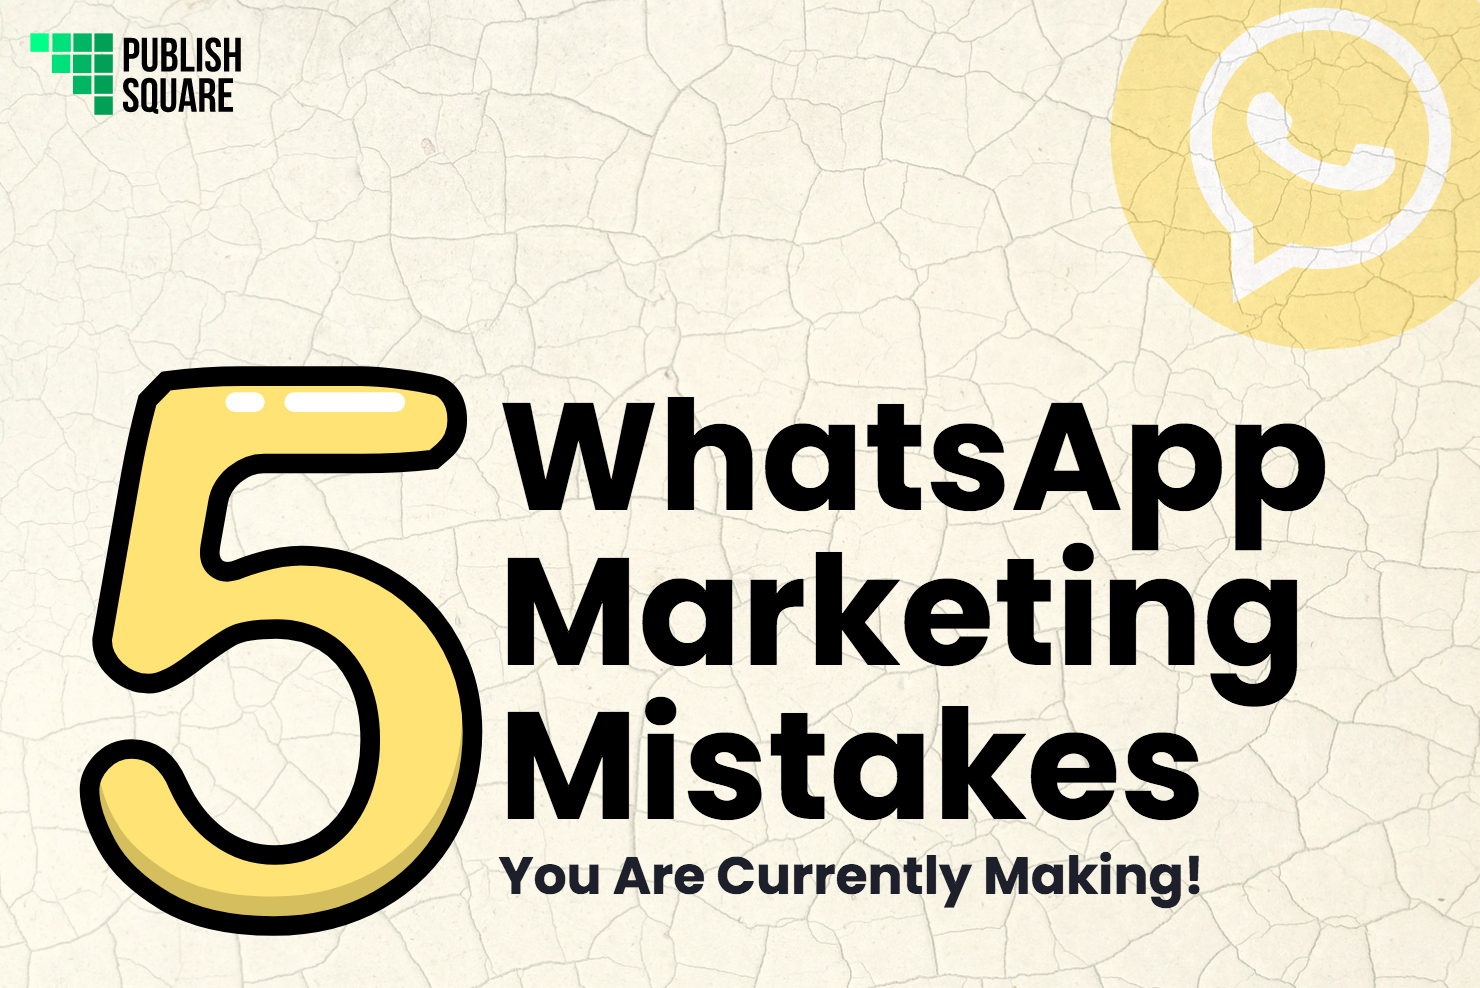 5 WhatsApp Marketing Mistakes